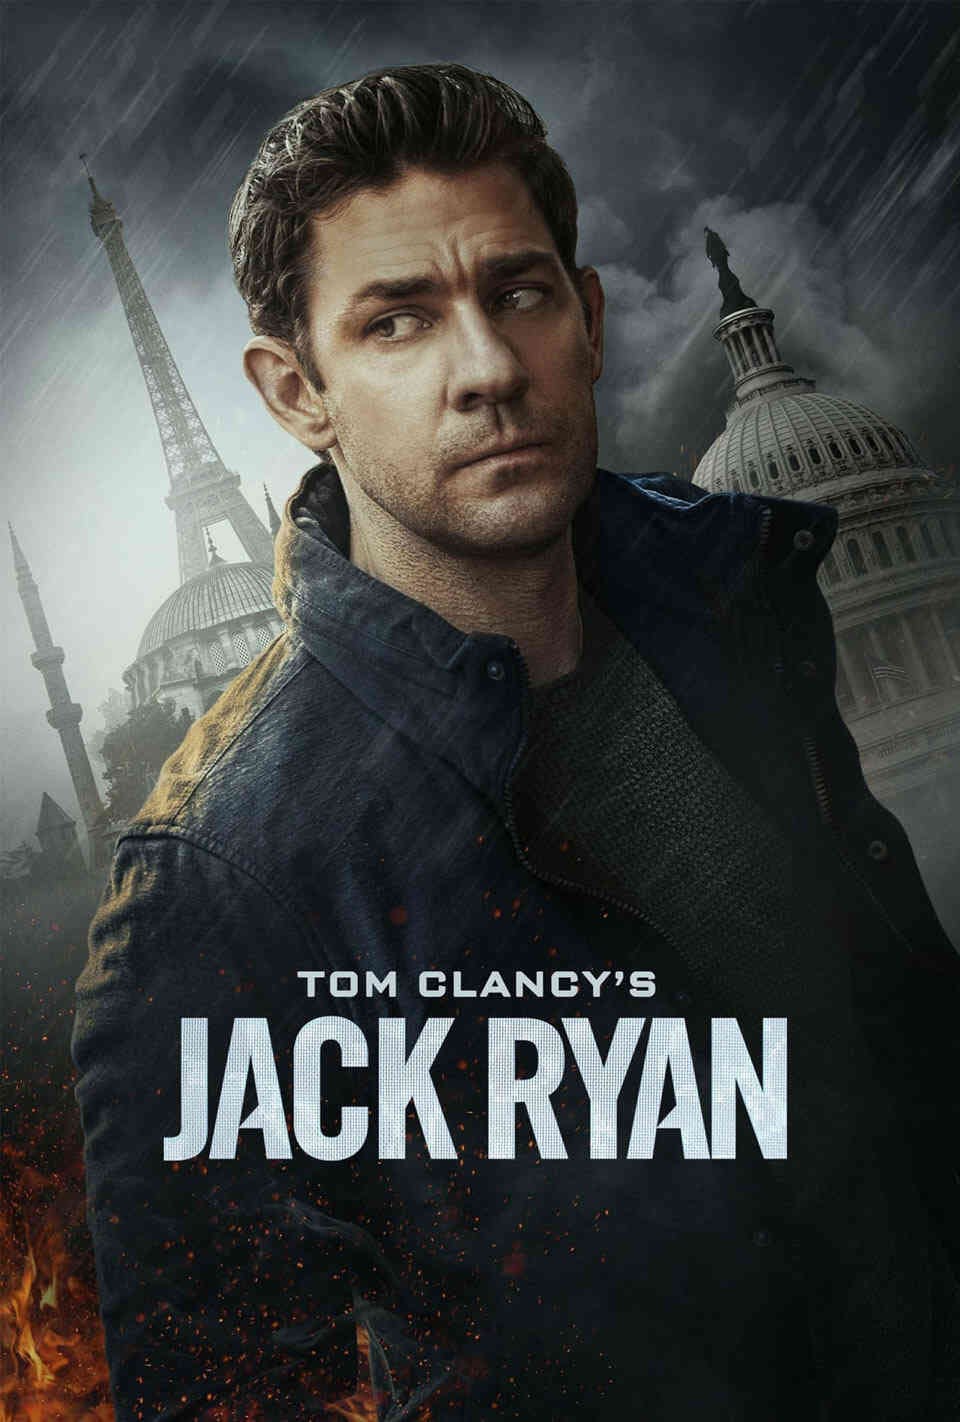 Read Tom Clancy's Jack Ryan screenplay (poster)